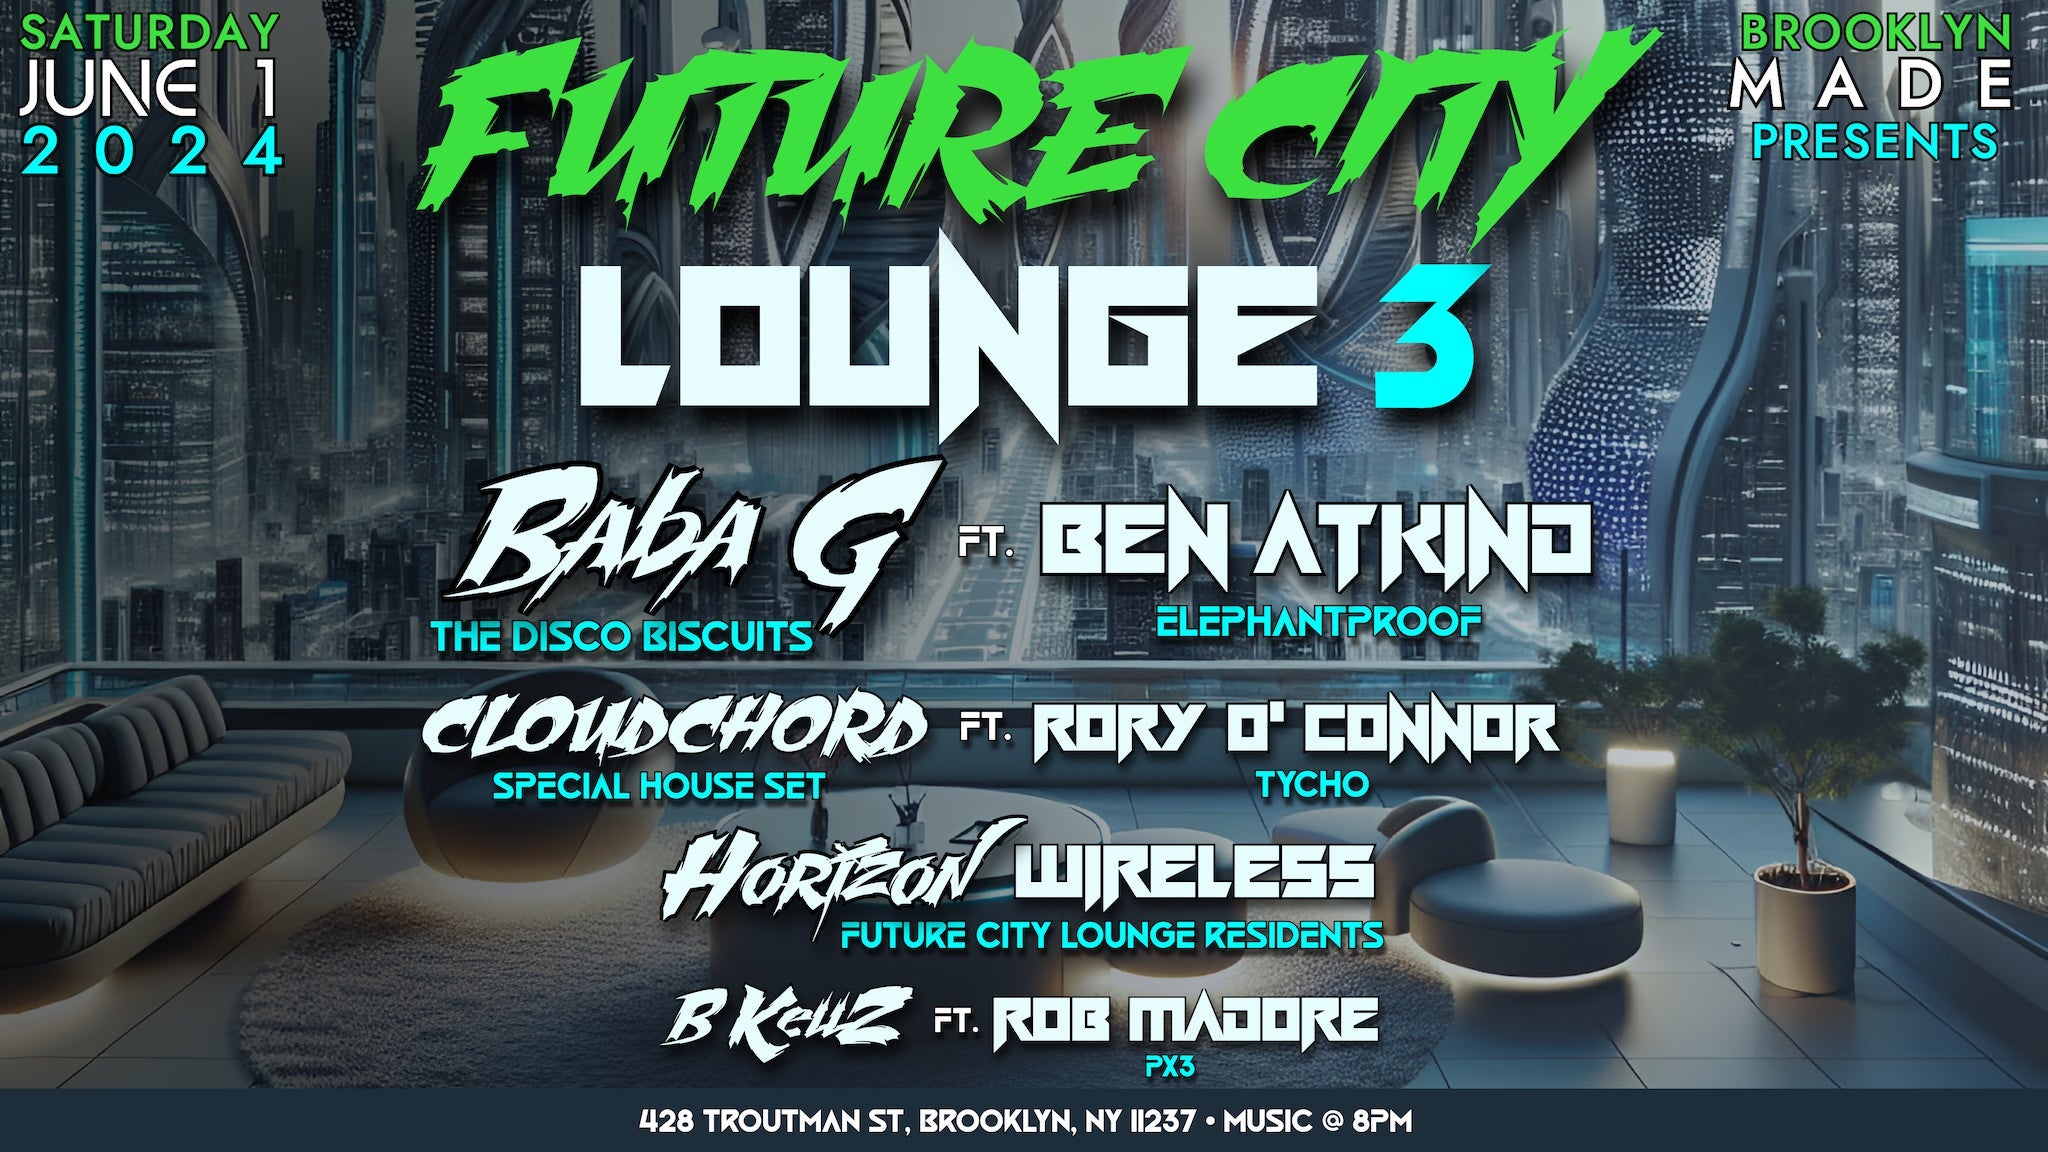 Future City Lounge 3 at Brooklyn Made